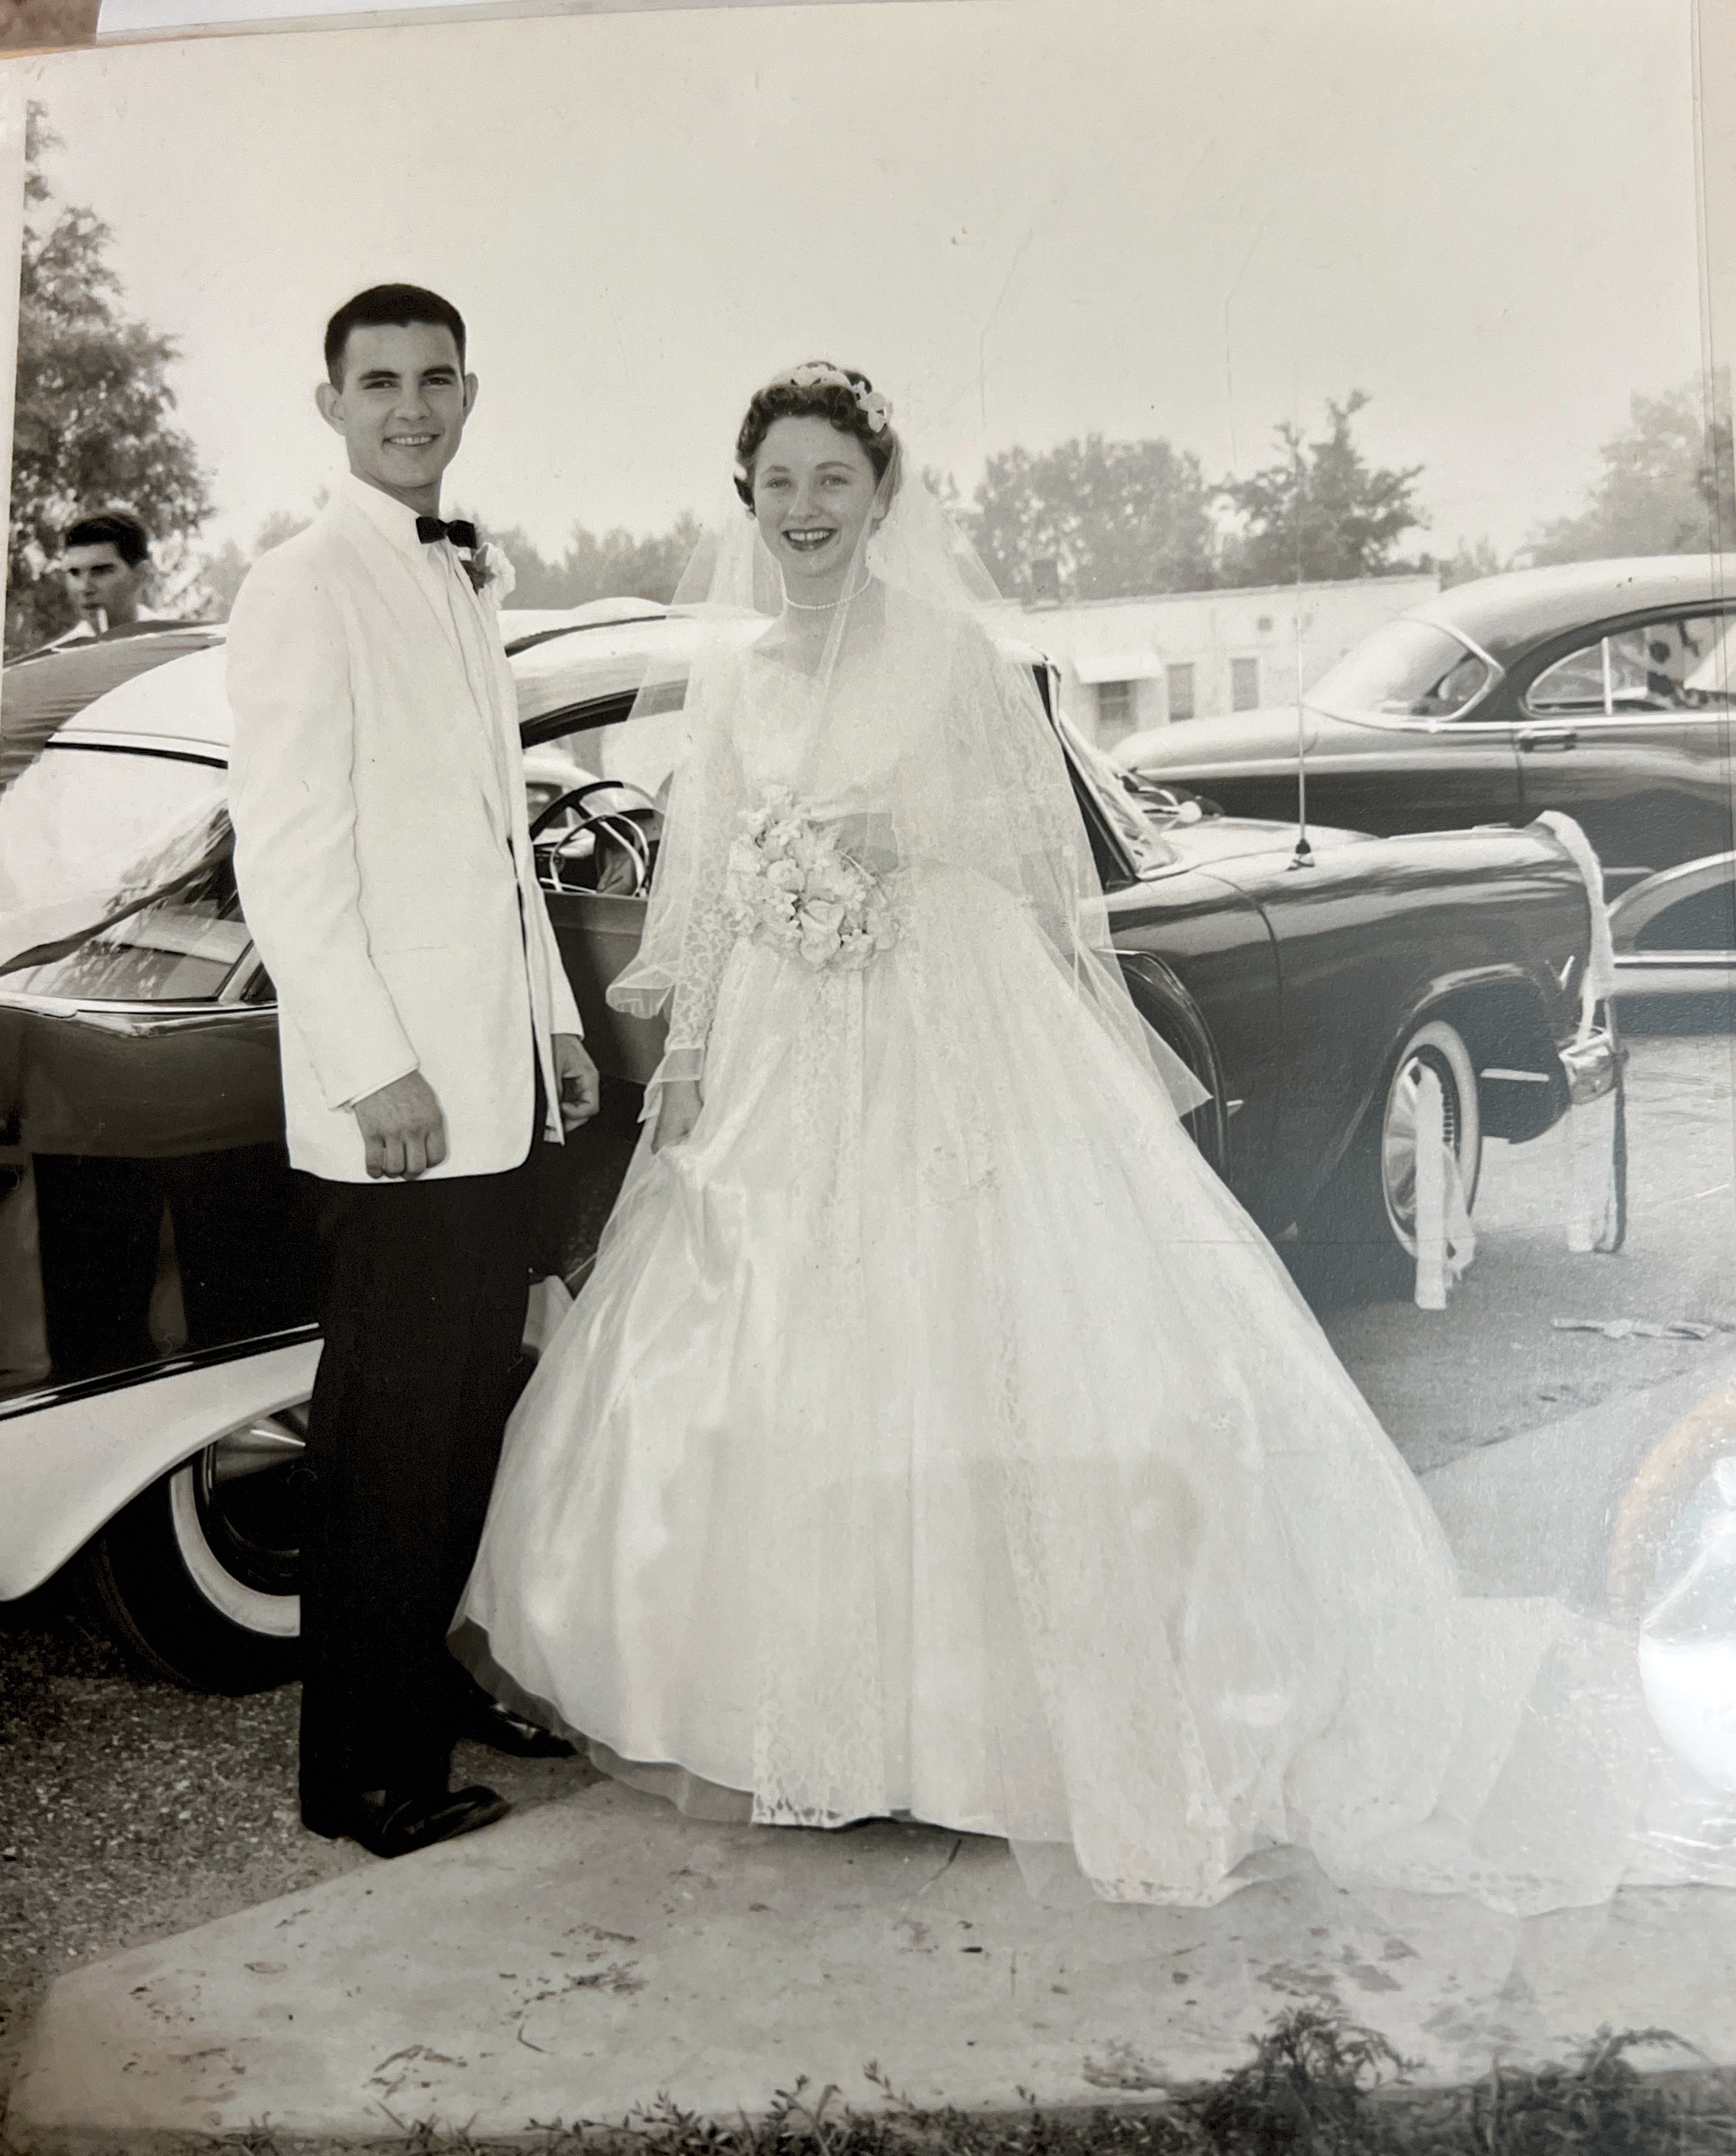 Judith Layton and Lenard Jones married in 1957